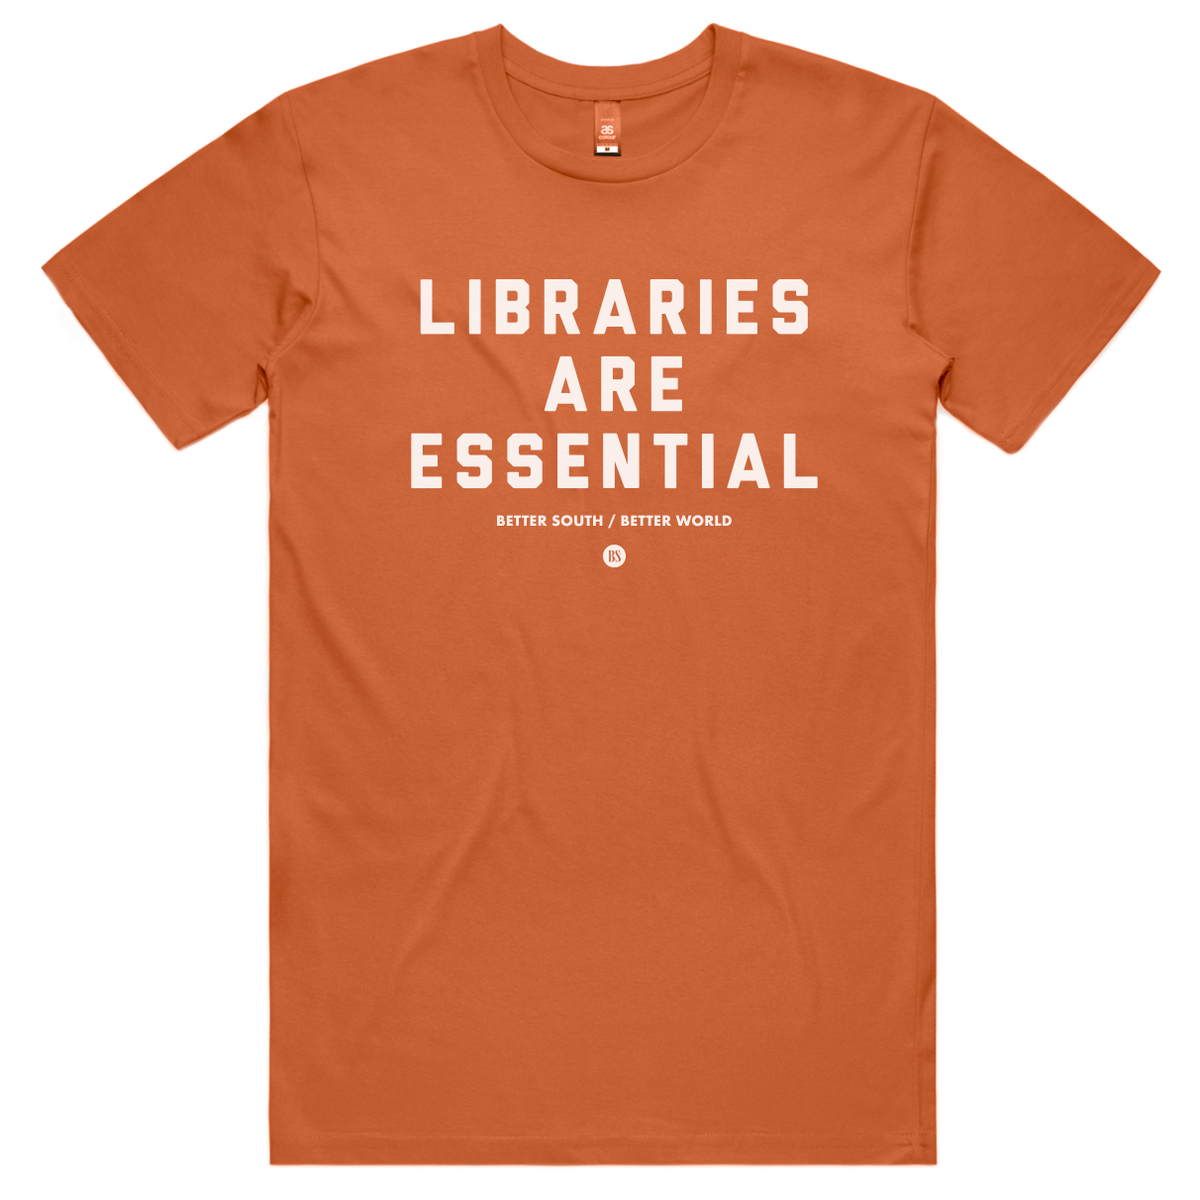 Libraries Are Essential - t-shirt (orange)